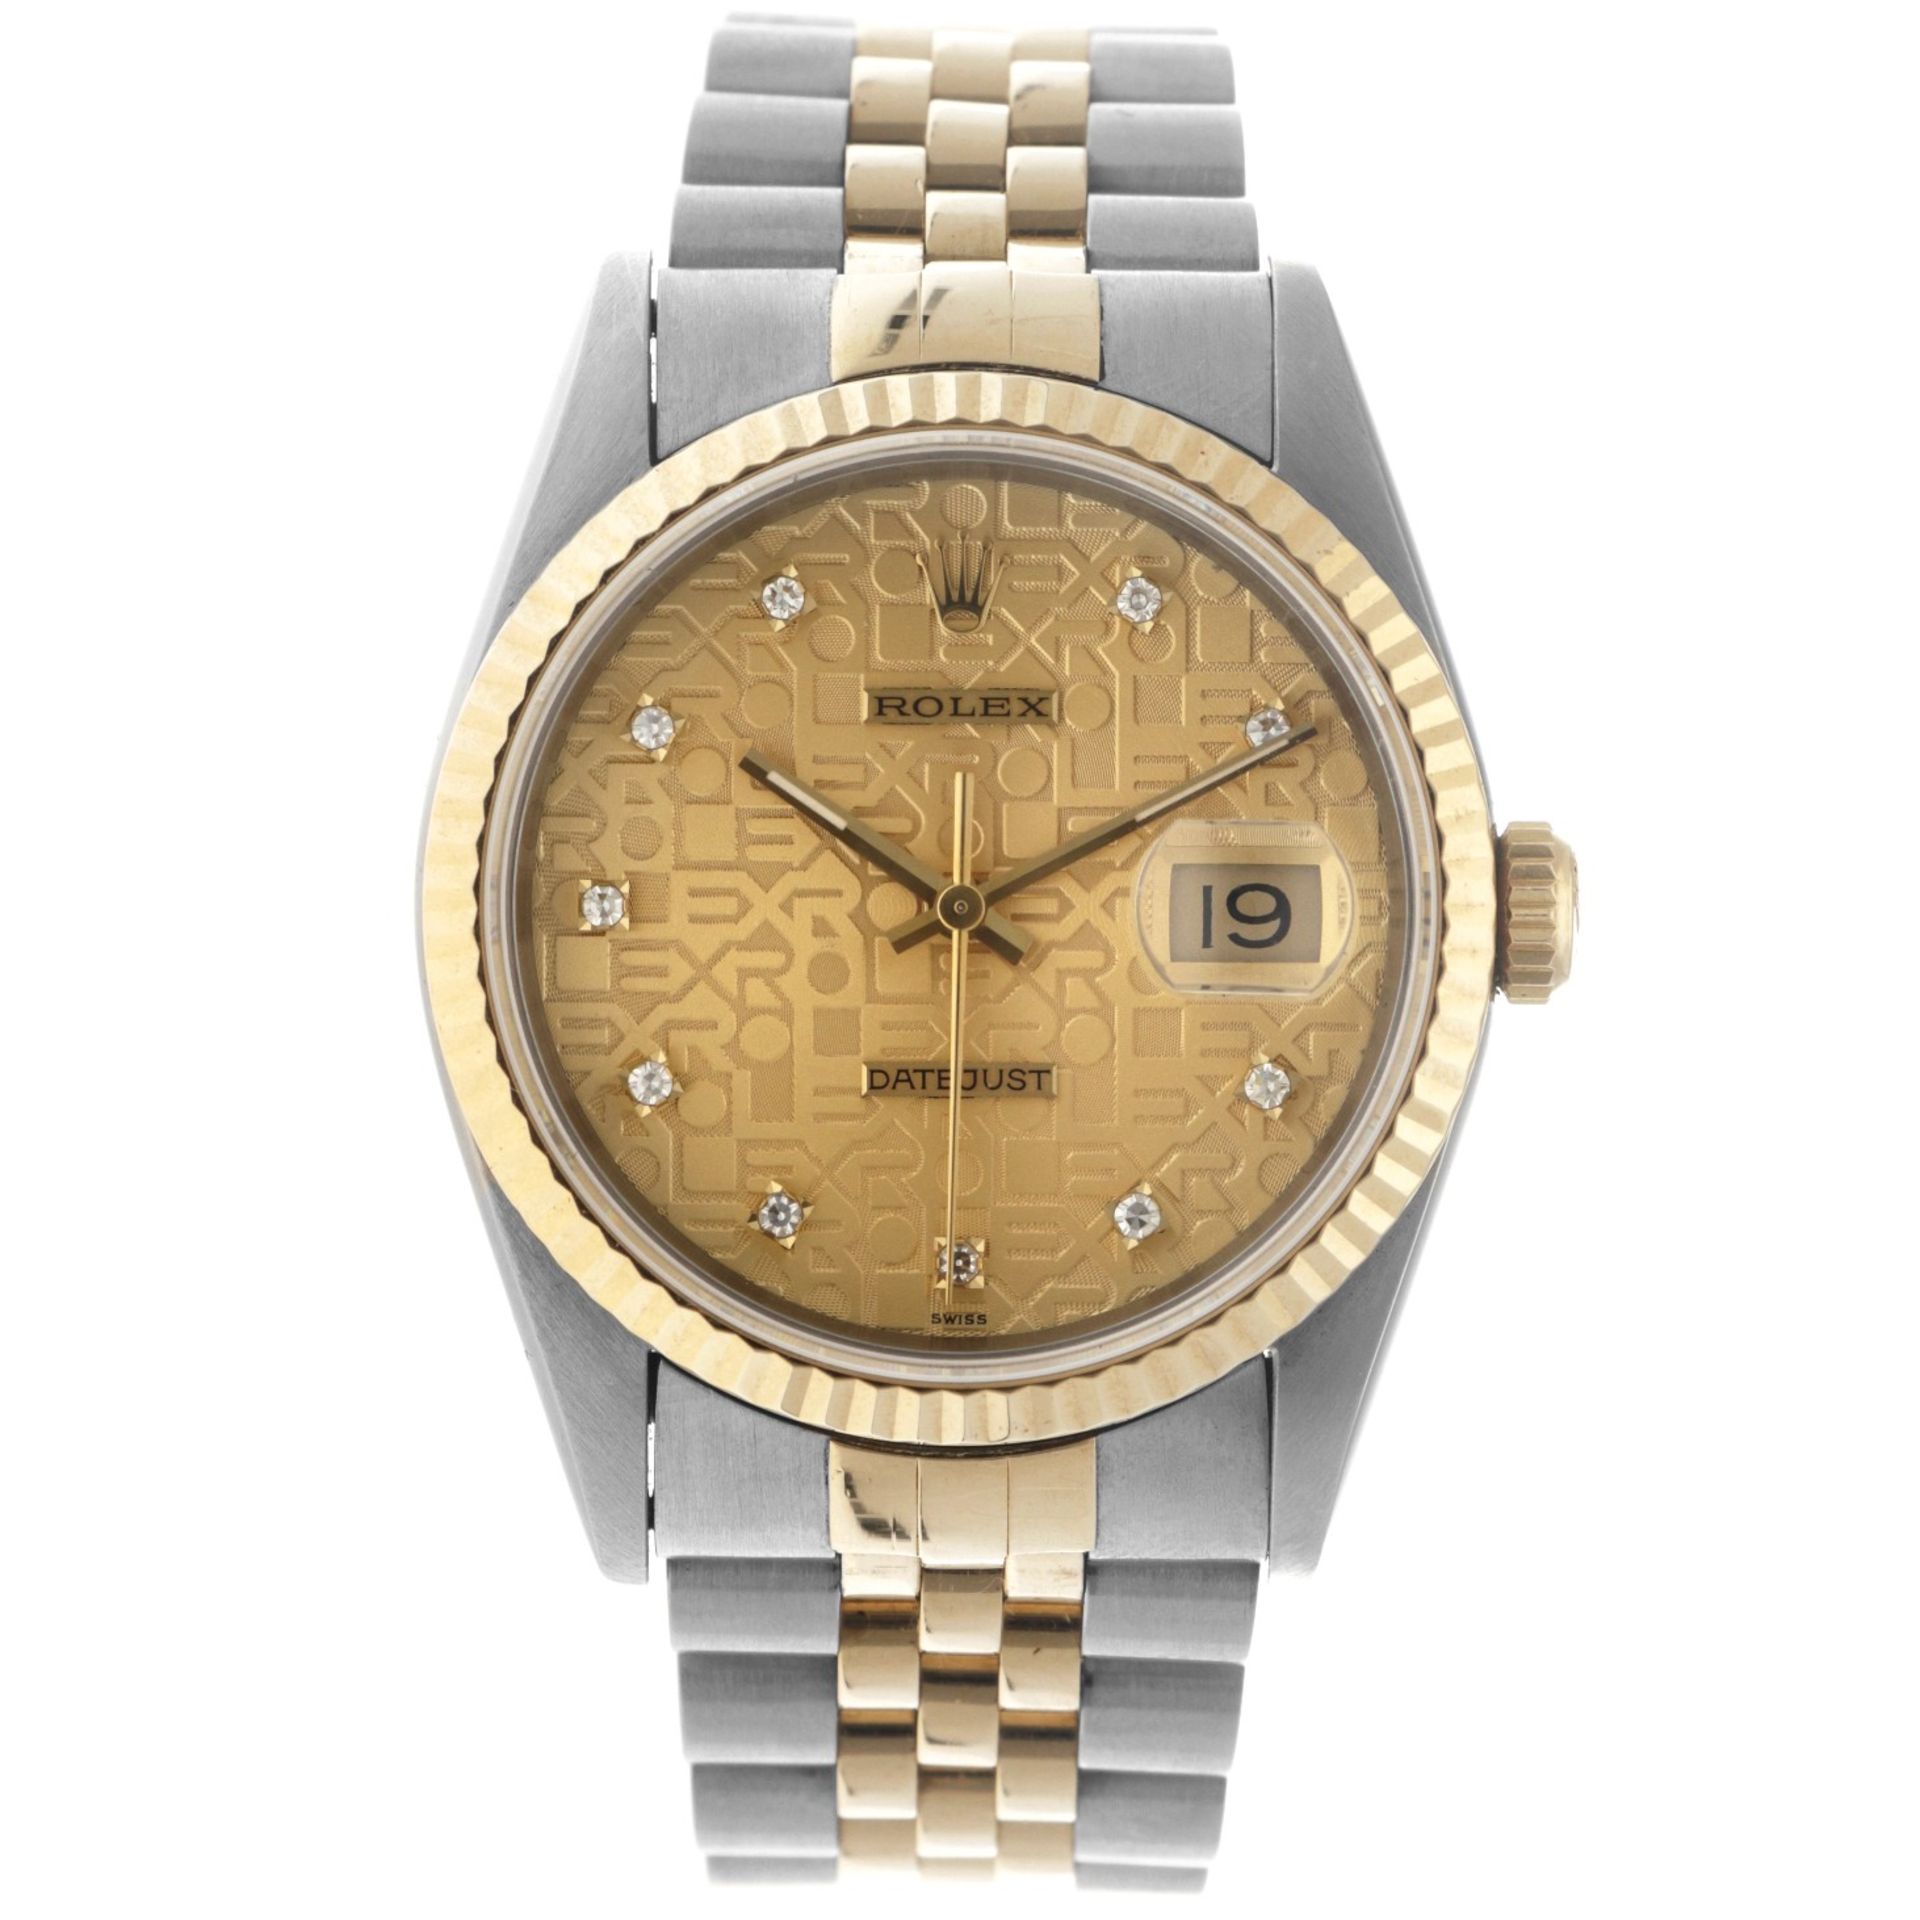 No Reserve - Rolex Datejust 36 "Computer/Jubilee Dial" 16233 - Men's watch - 1995.